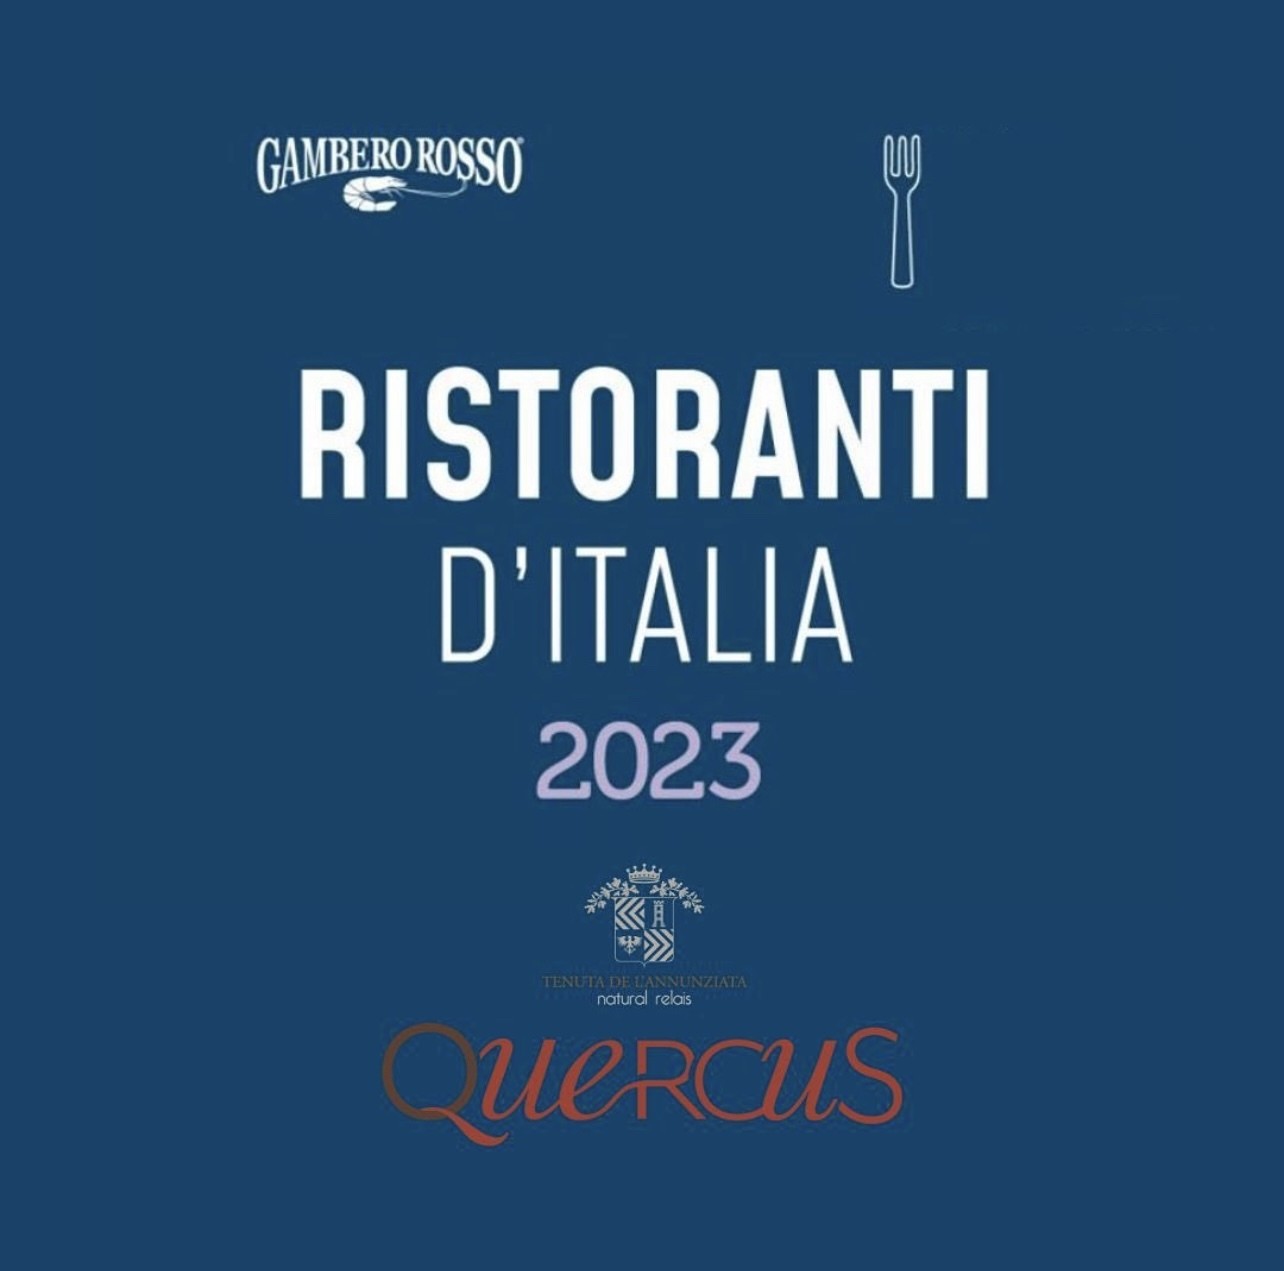 GAMBERO ROSSO - RISTORANTI D'ITALIA 2023